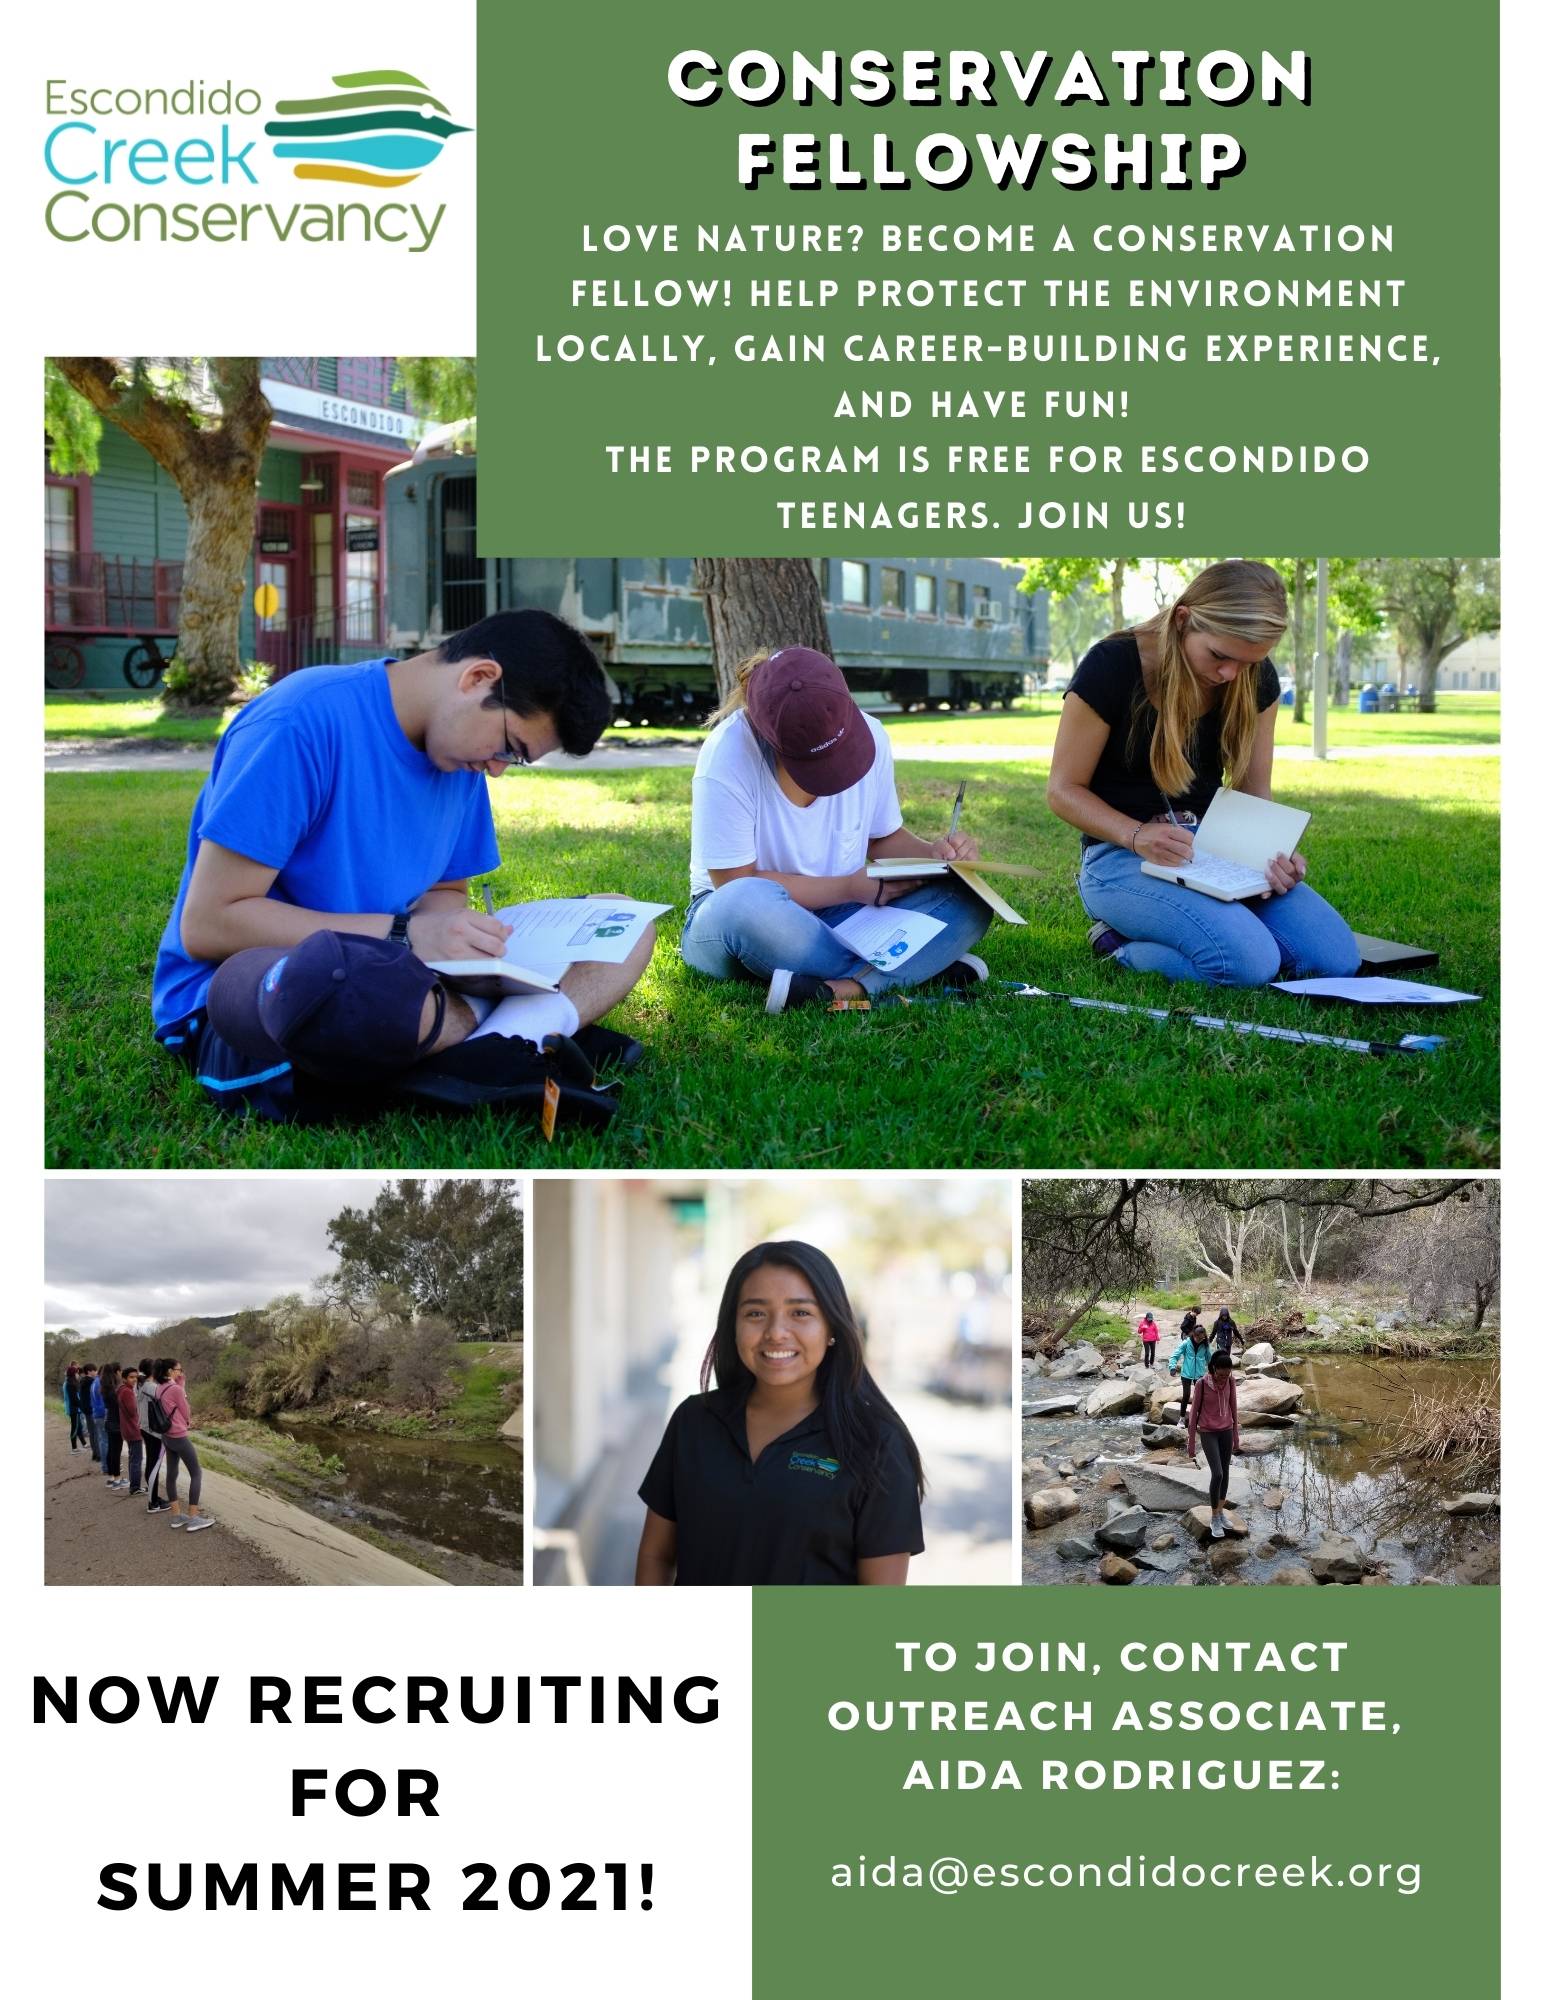 Conservation Fellowship informational flyer for Escondido Creek Conservancy